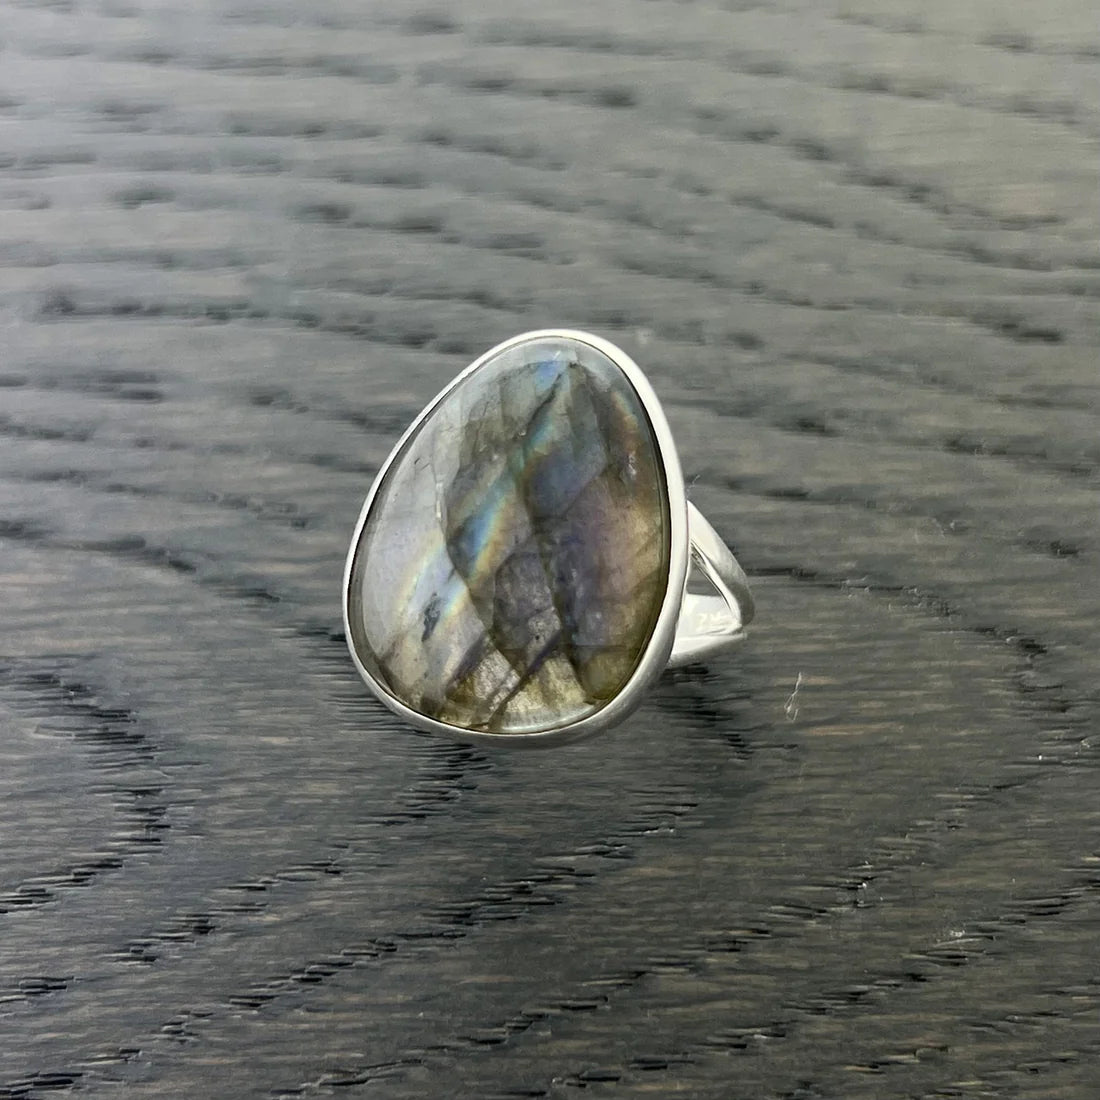 Purple Fire Labradorite Ring in Sterling Silver